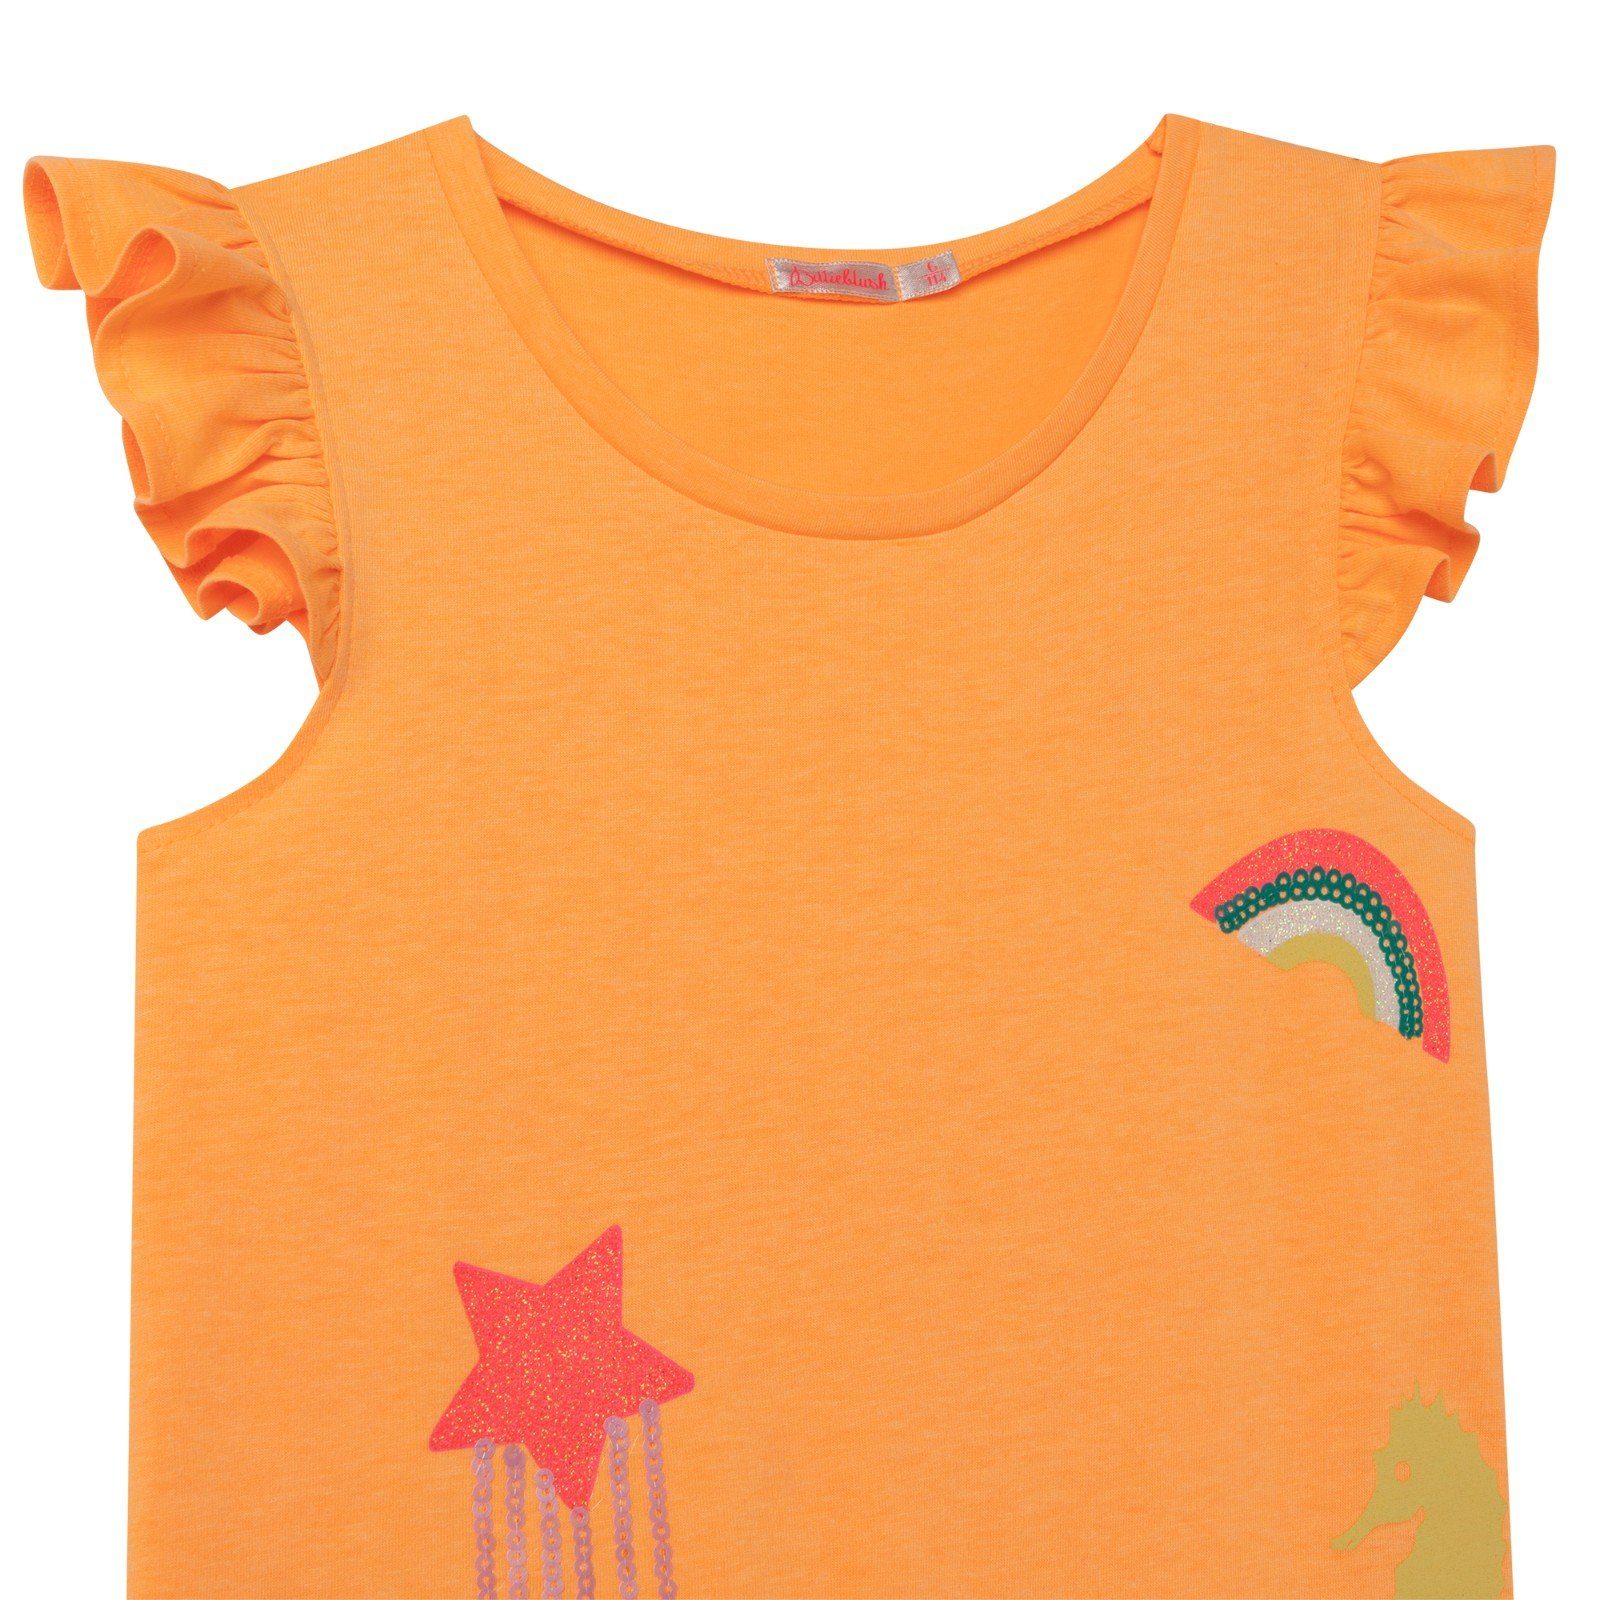 Shirtkleid Billieblush orange fancy mit Billieblush Shirtkleid Tanktop Print